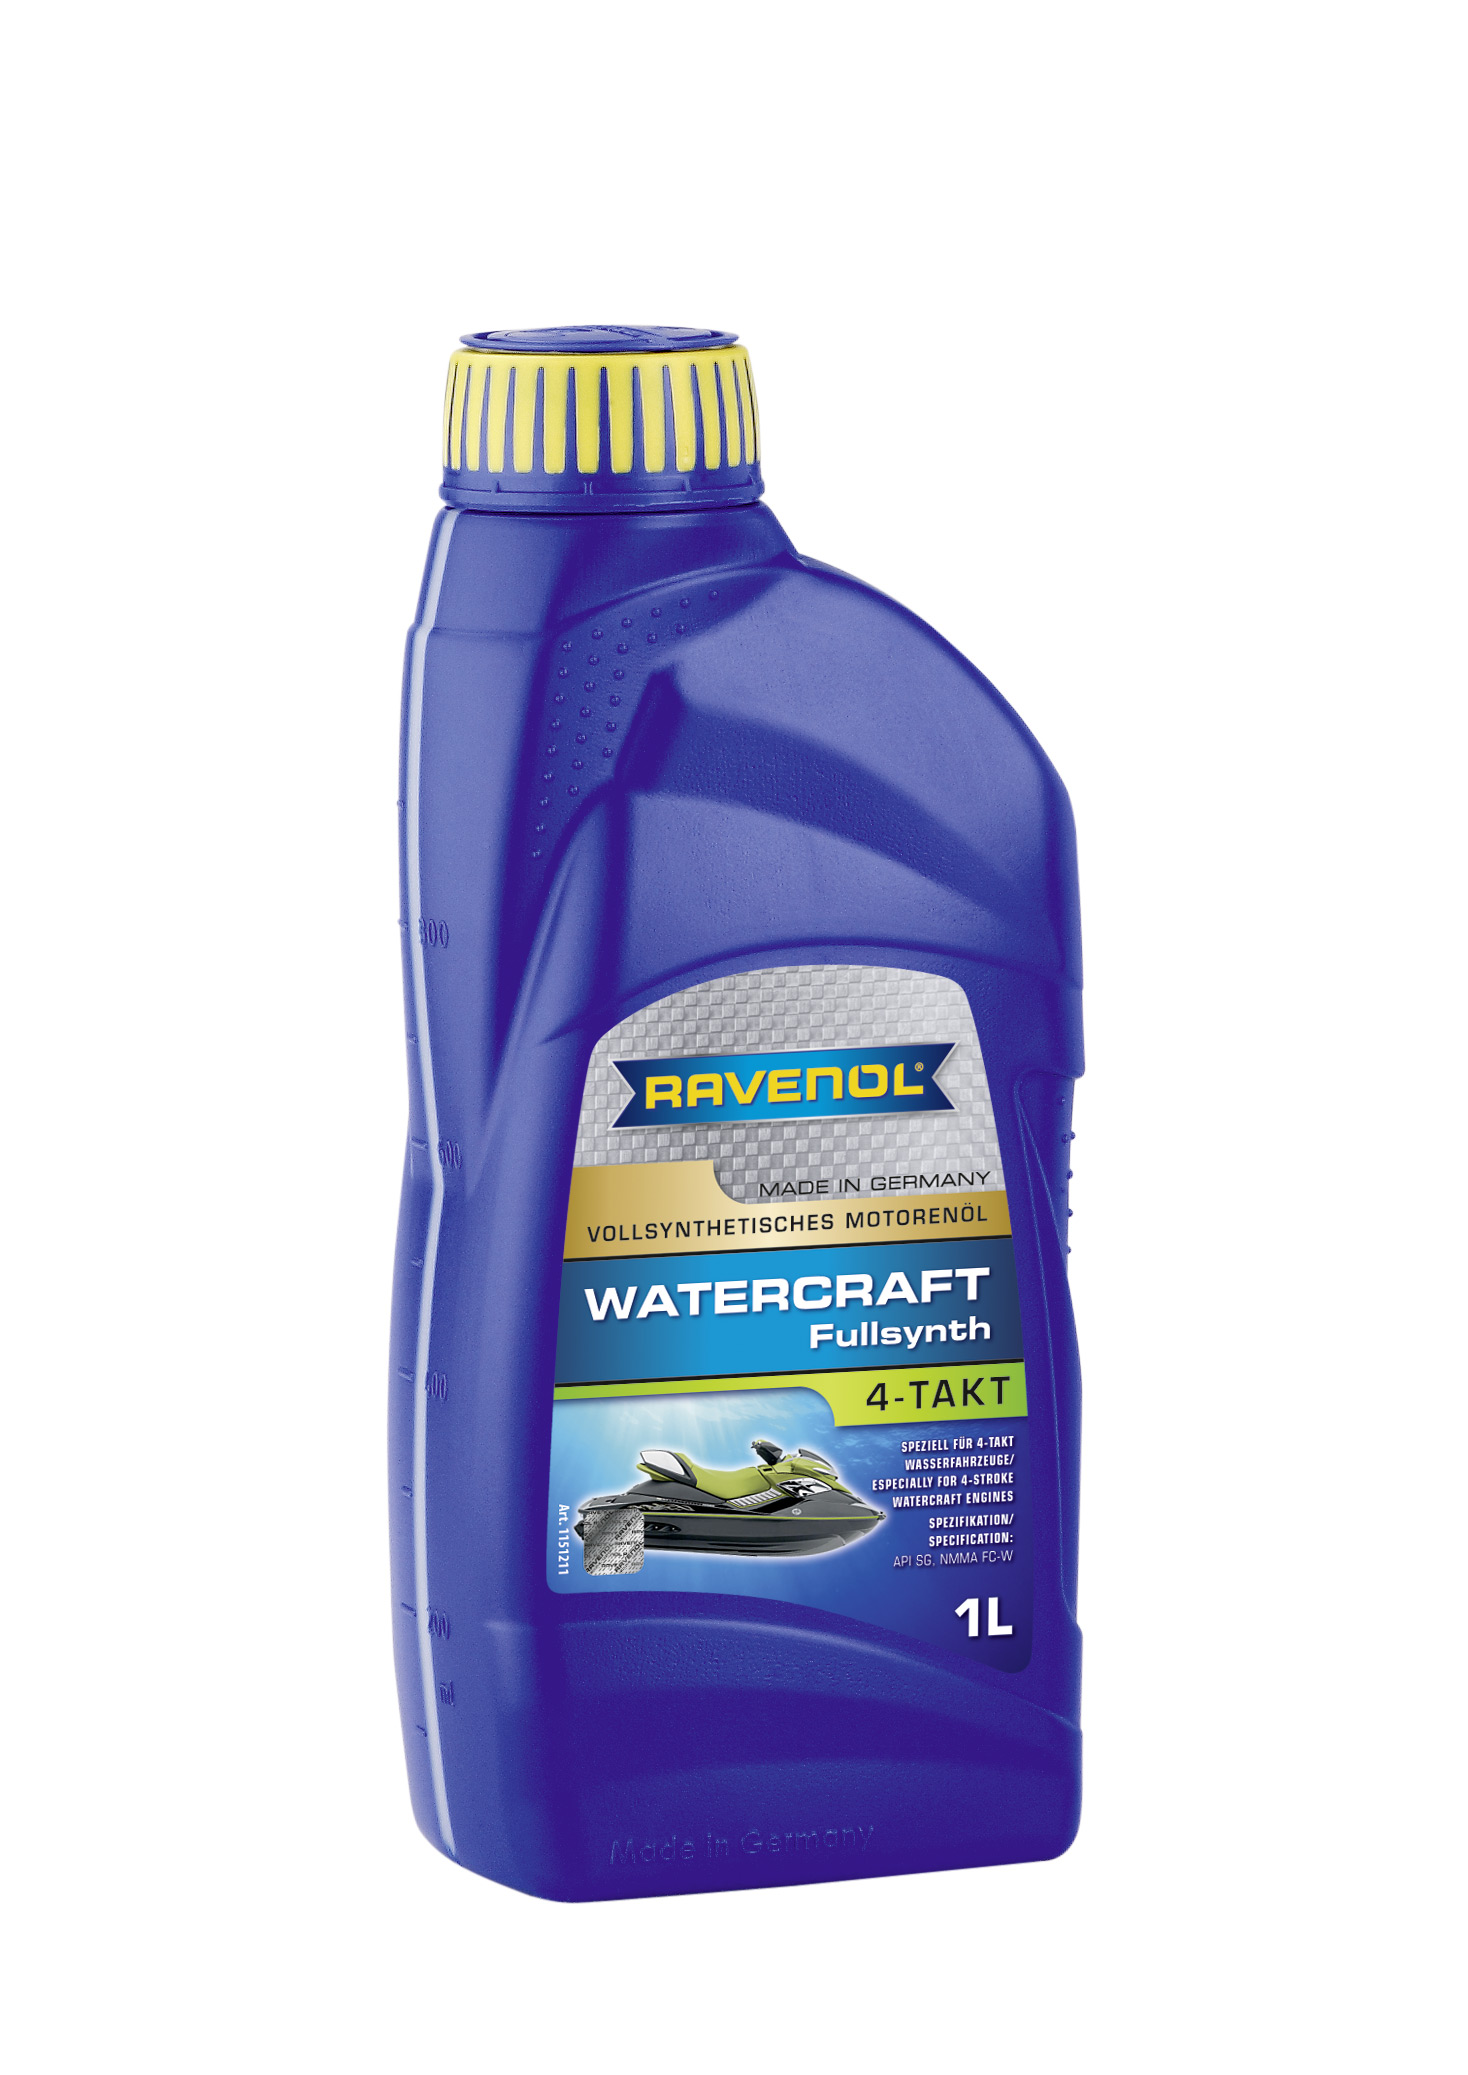 Моторное масло для 4-Такт RAVENOL Watercraft 4-Takt (1л) new 4014835727816